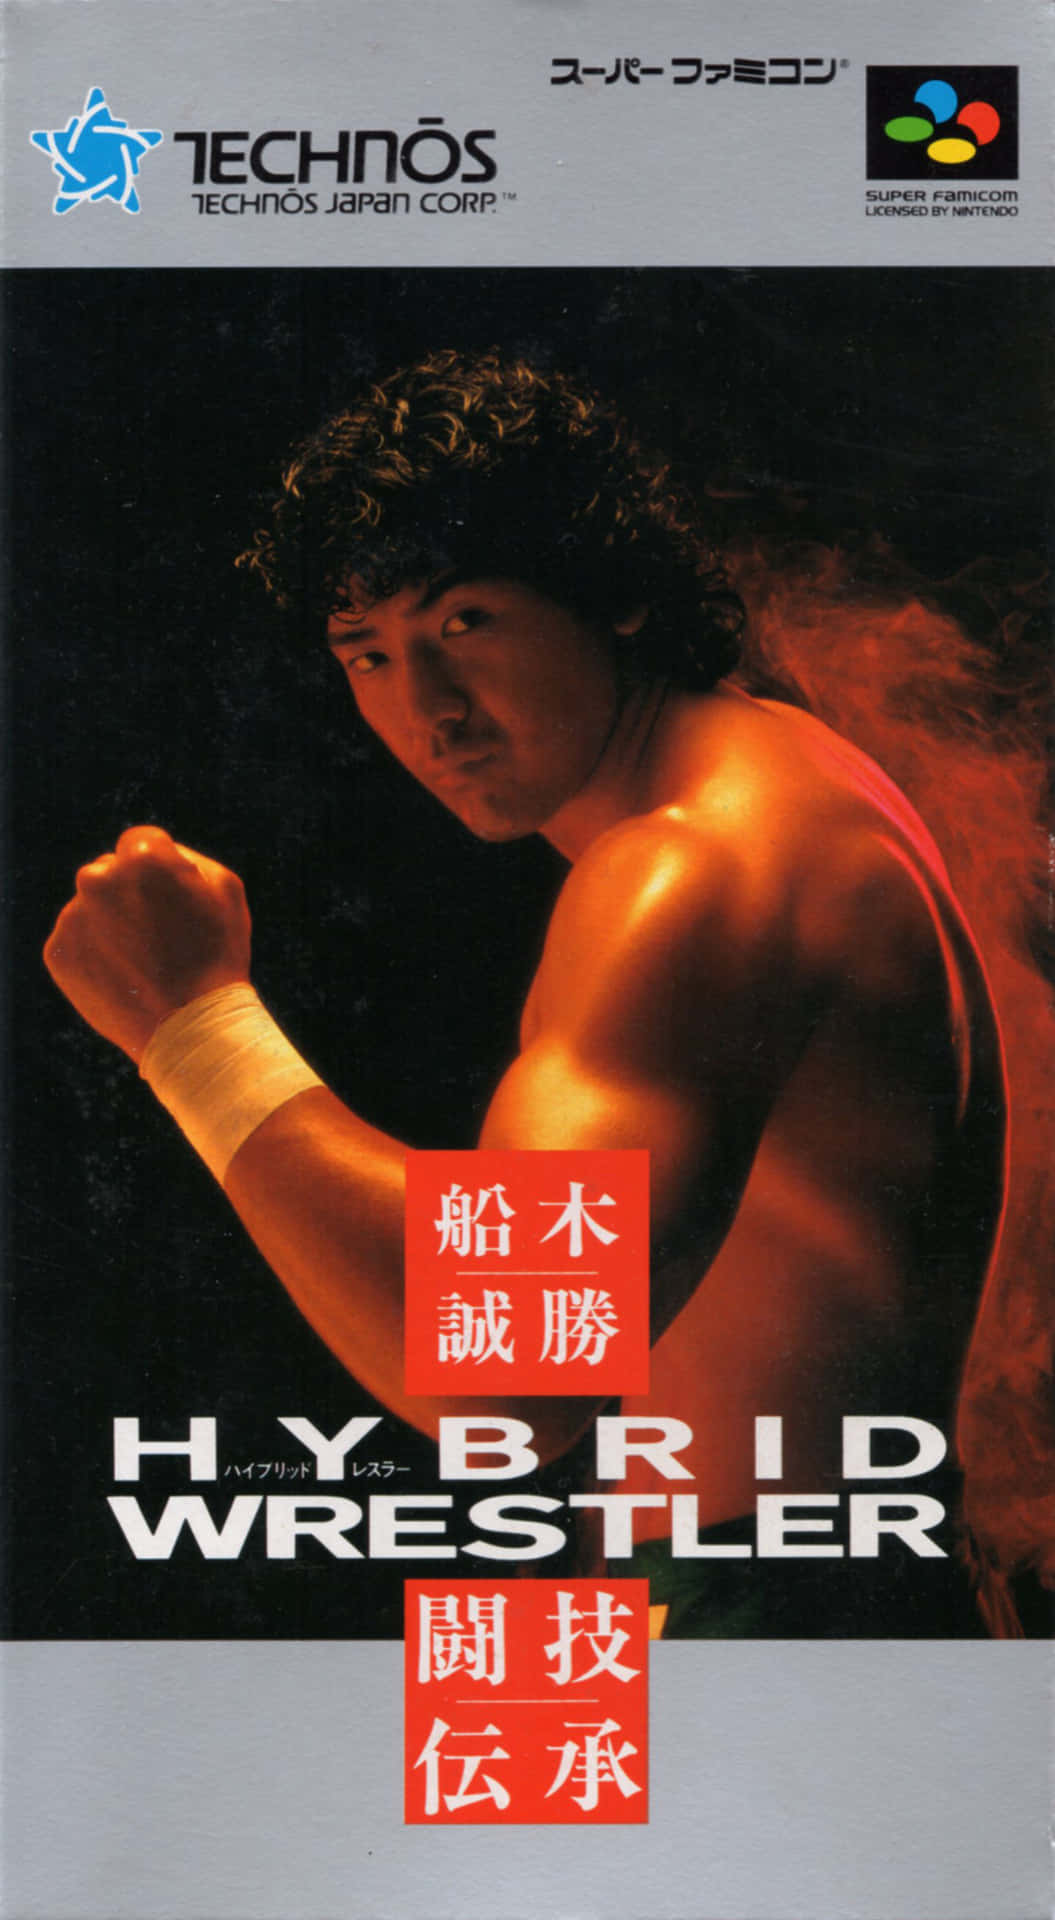 Videogame Hybrid Wrestler Med Masakatsu Funaki. Wallpaper